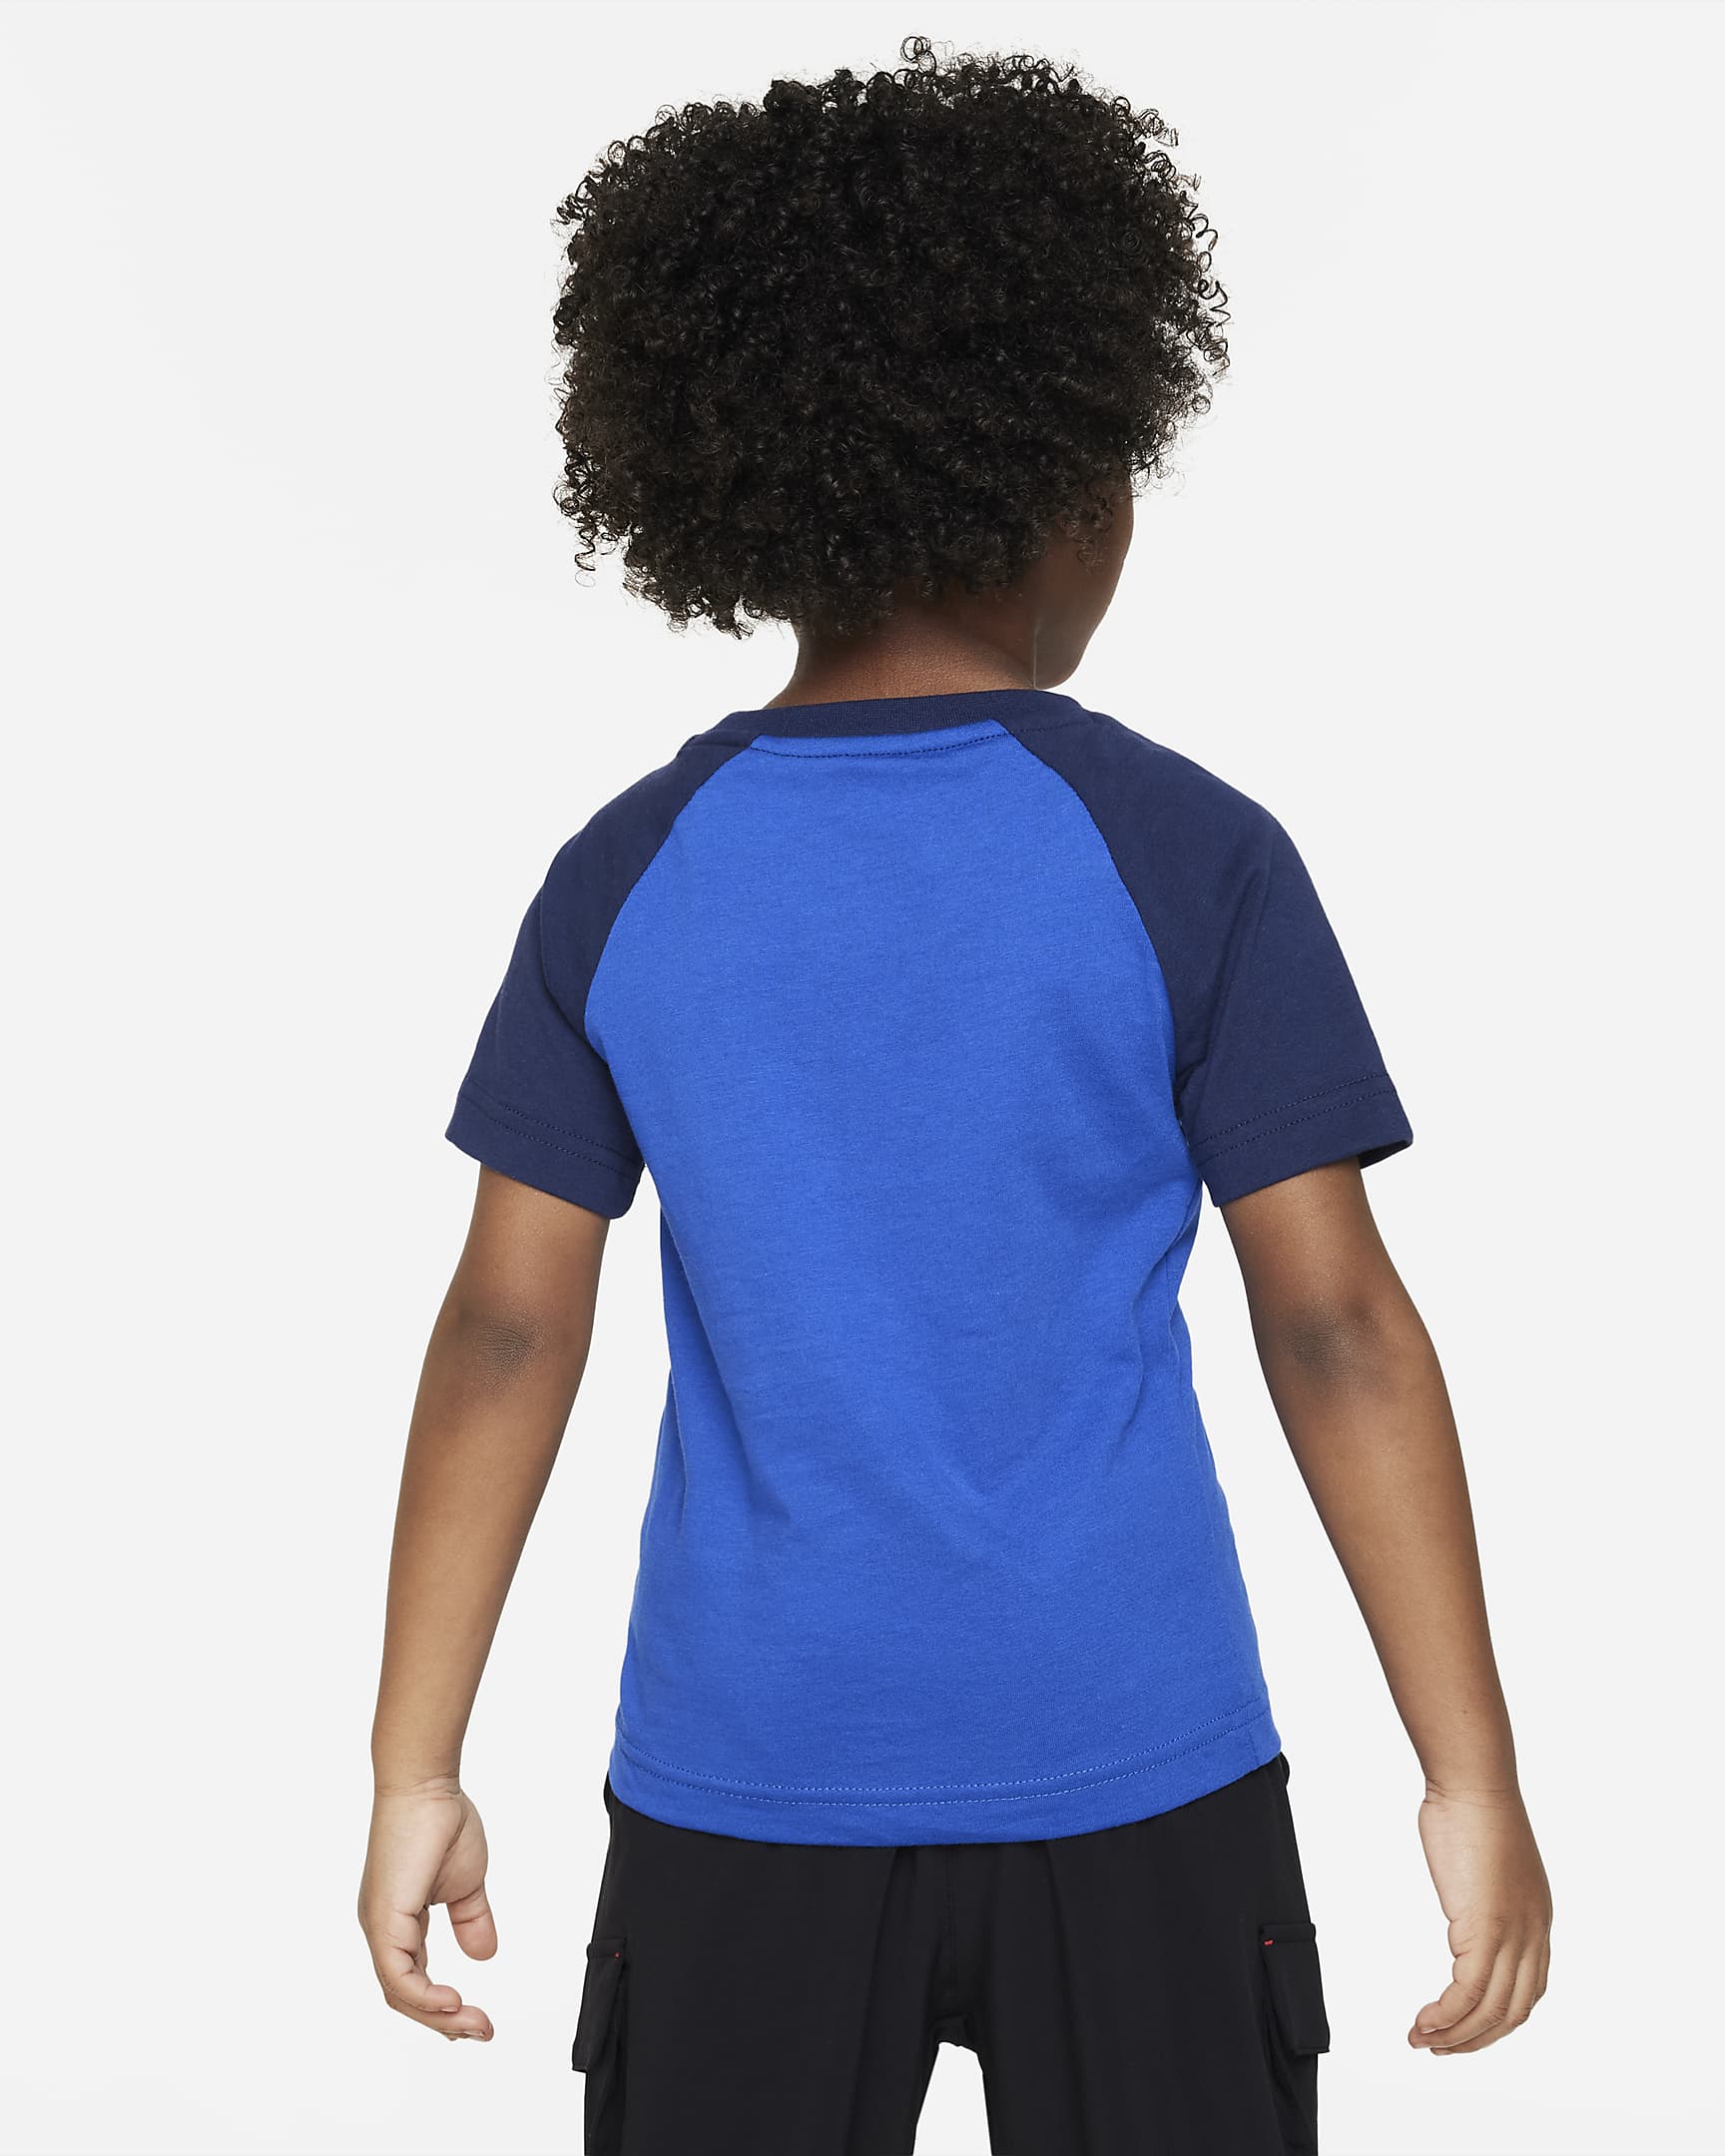 Nike Sportswear Futura Raglan Tee Toddler T-Shirt. Nike.com